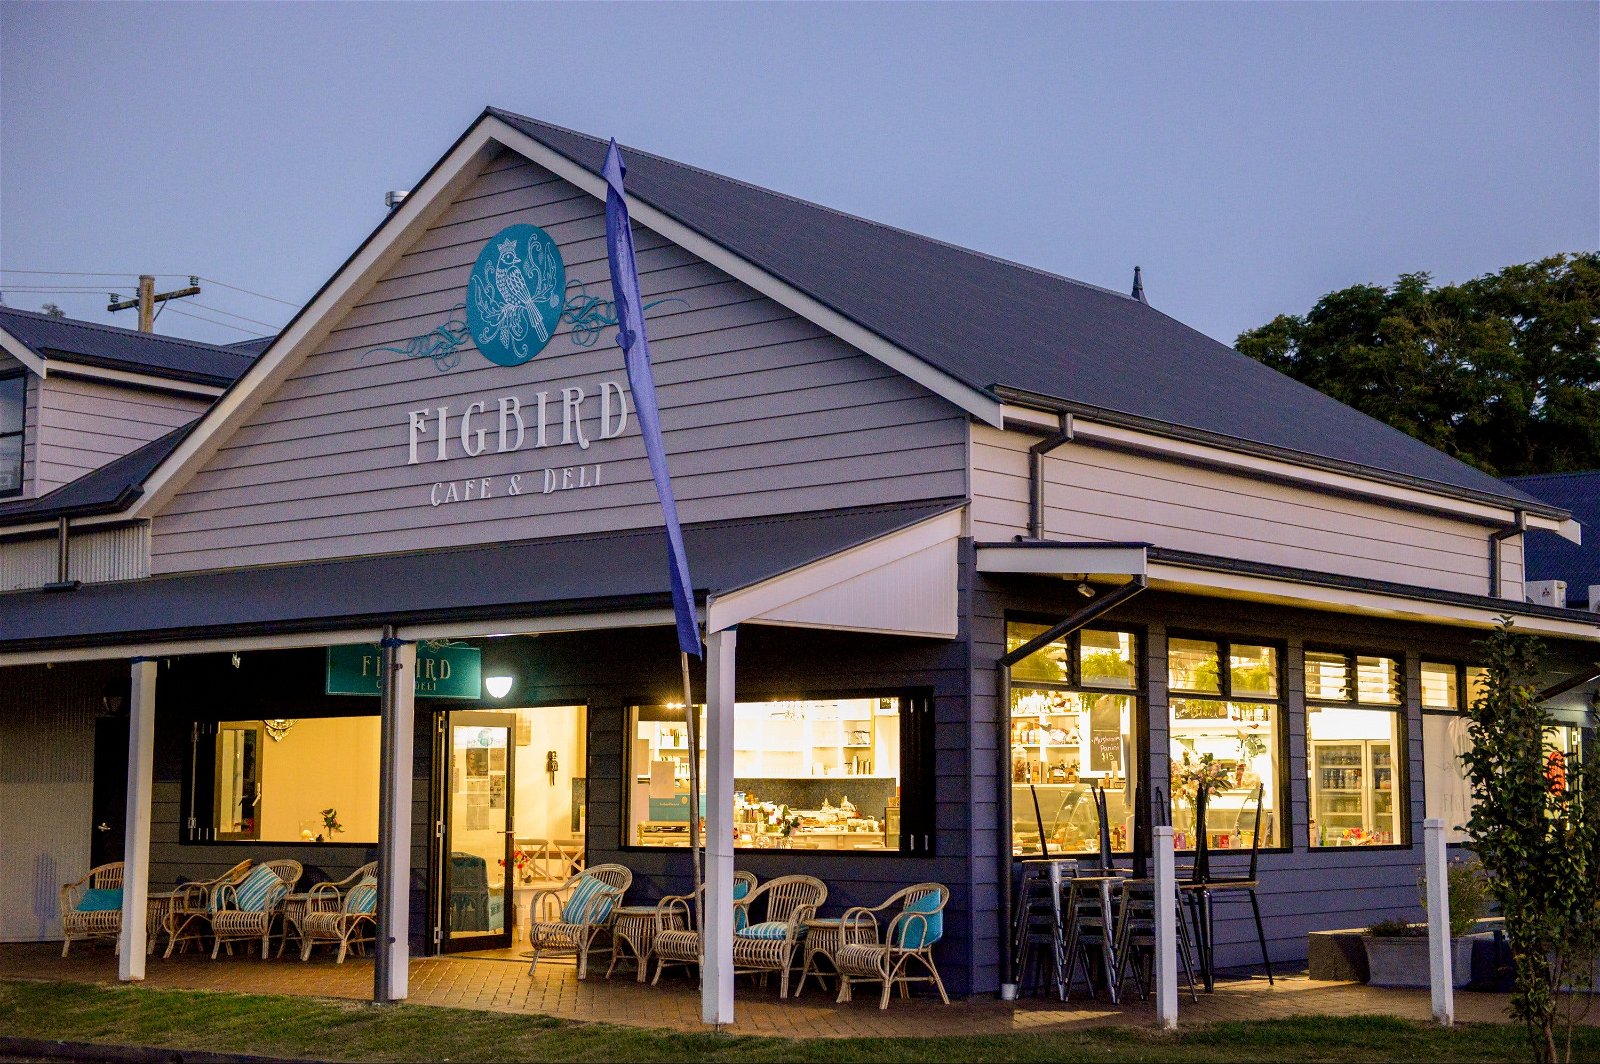 Figbird Cafe and Deli - Australia Accommodation